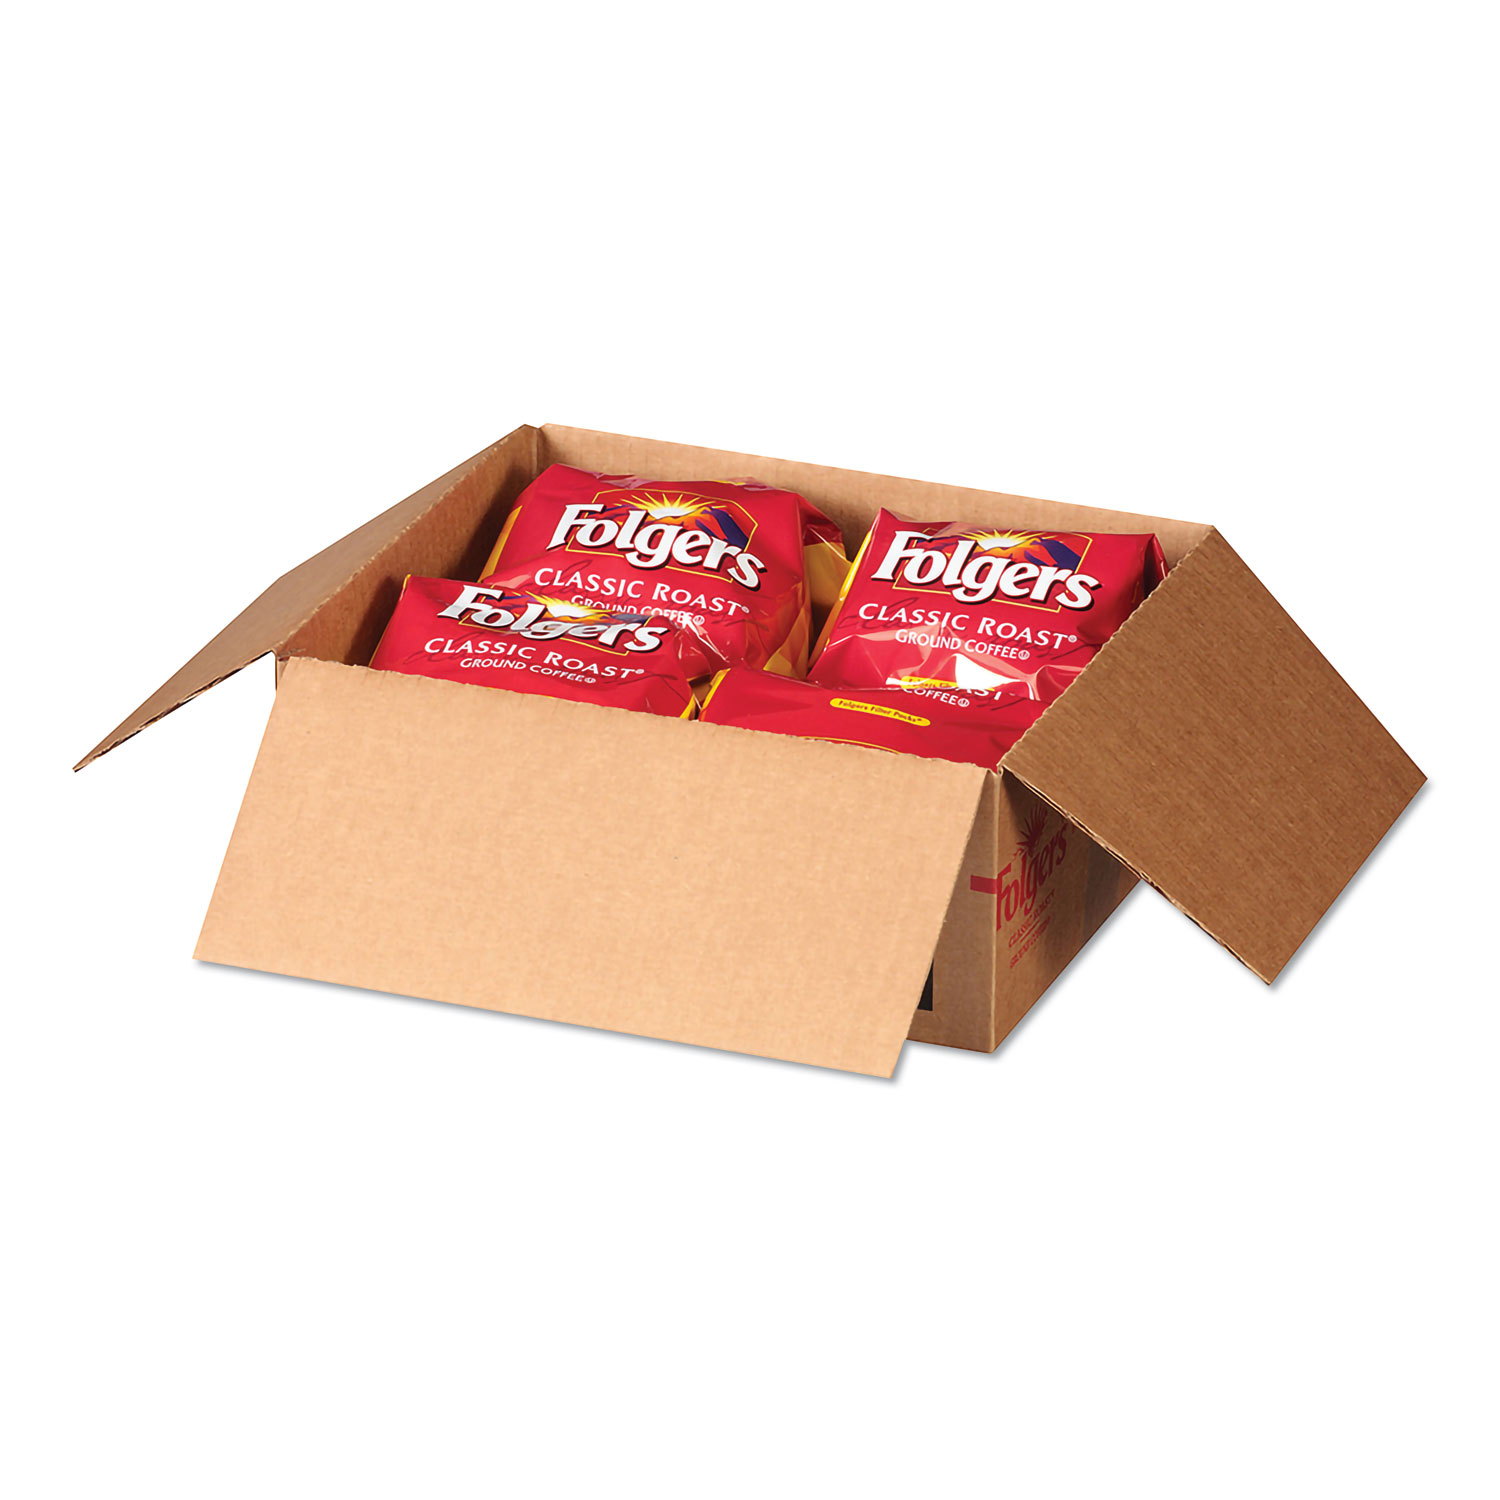  Folgers FOL06239 Coffee Filter Packs, Classic Roast, .9 oz, 10 Filters/Pack, 4 Packs/Carton (FOL06239) 